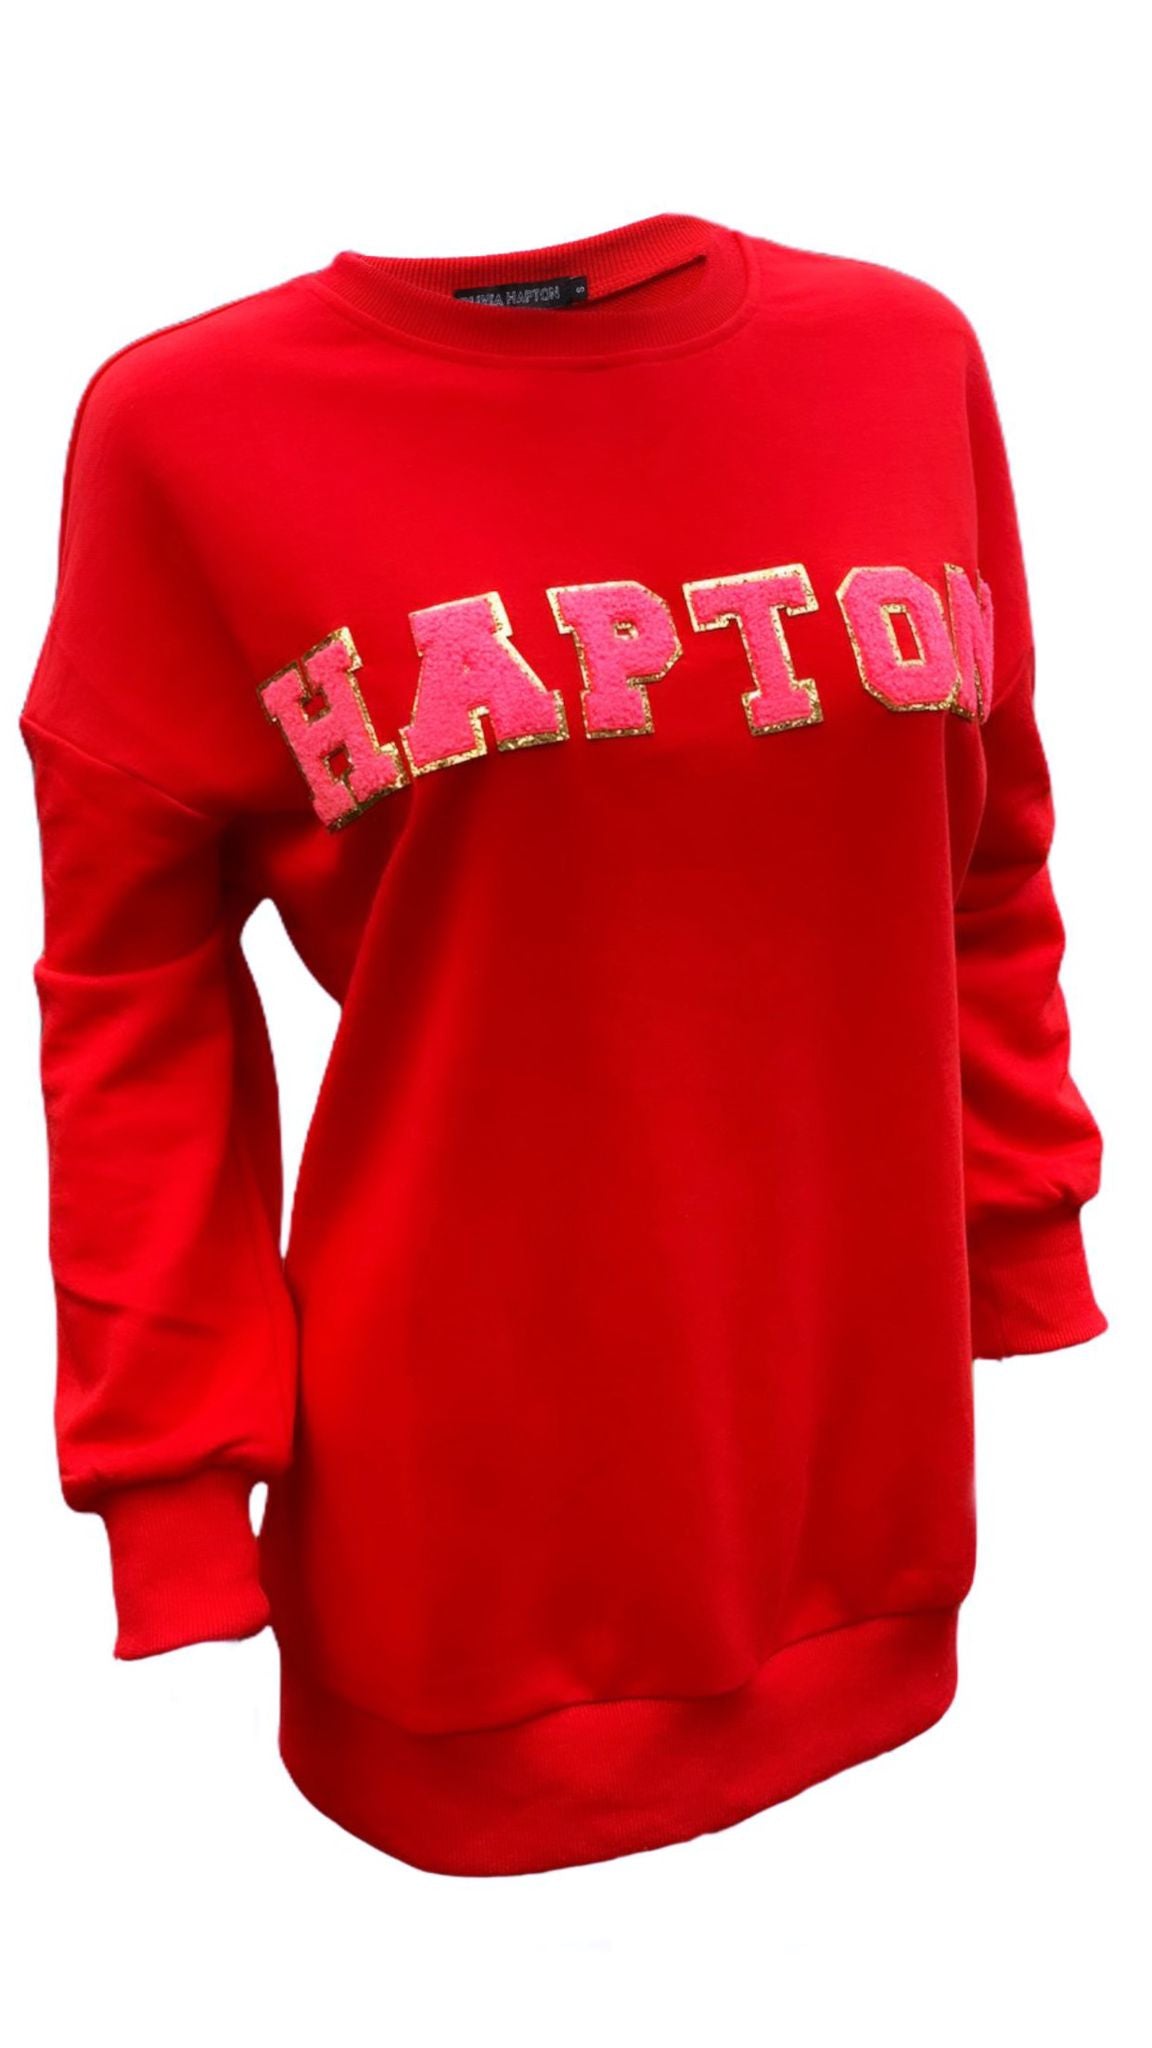 HAPTON sweatshirt - RED